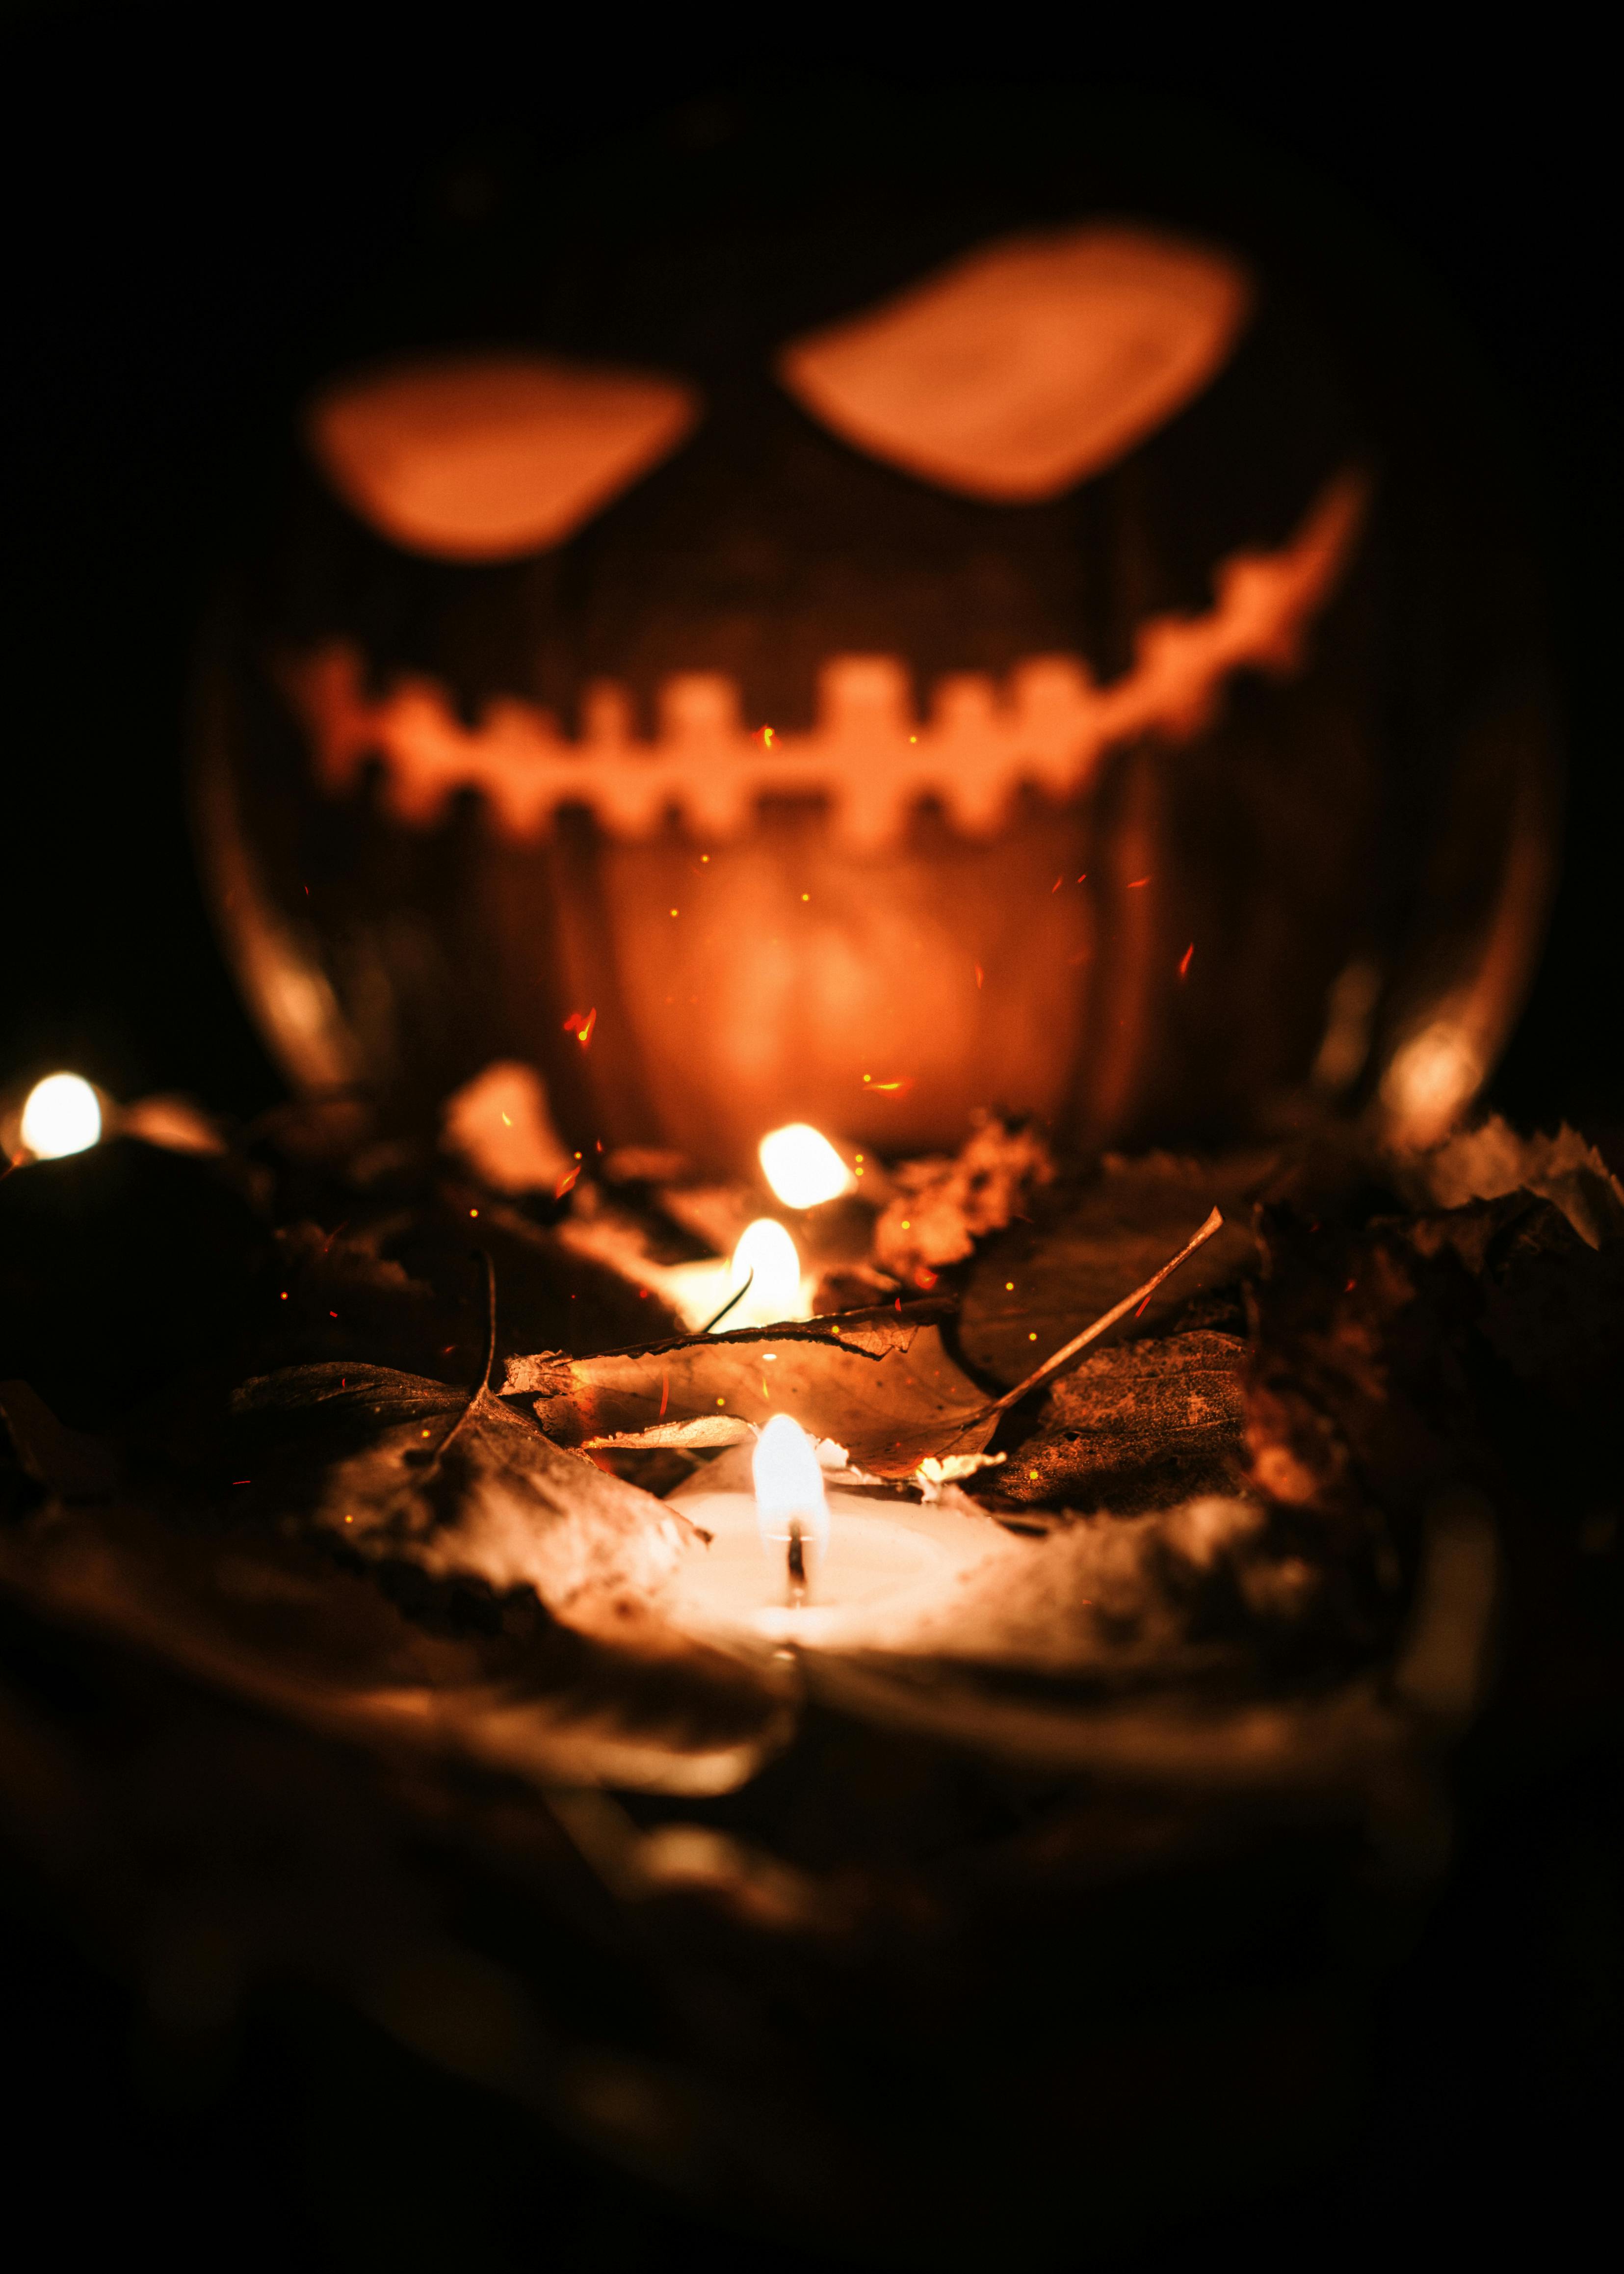 Halloween Background Photos, Download The BEST Free Halloween Background  Stock Photos & HD Images